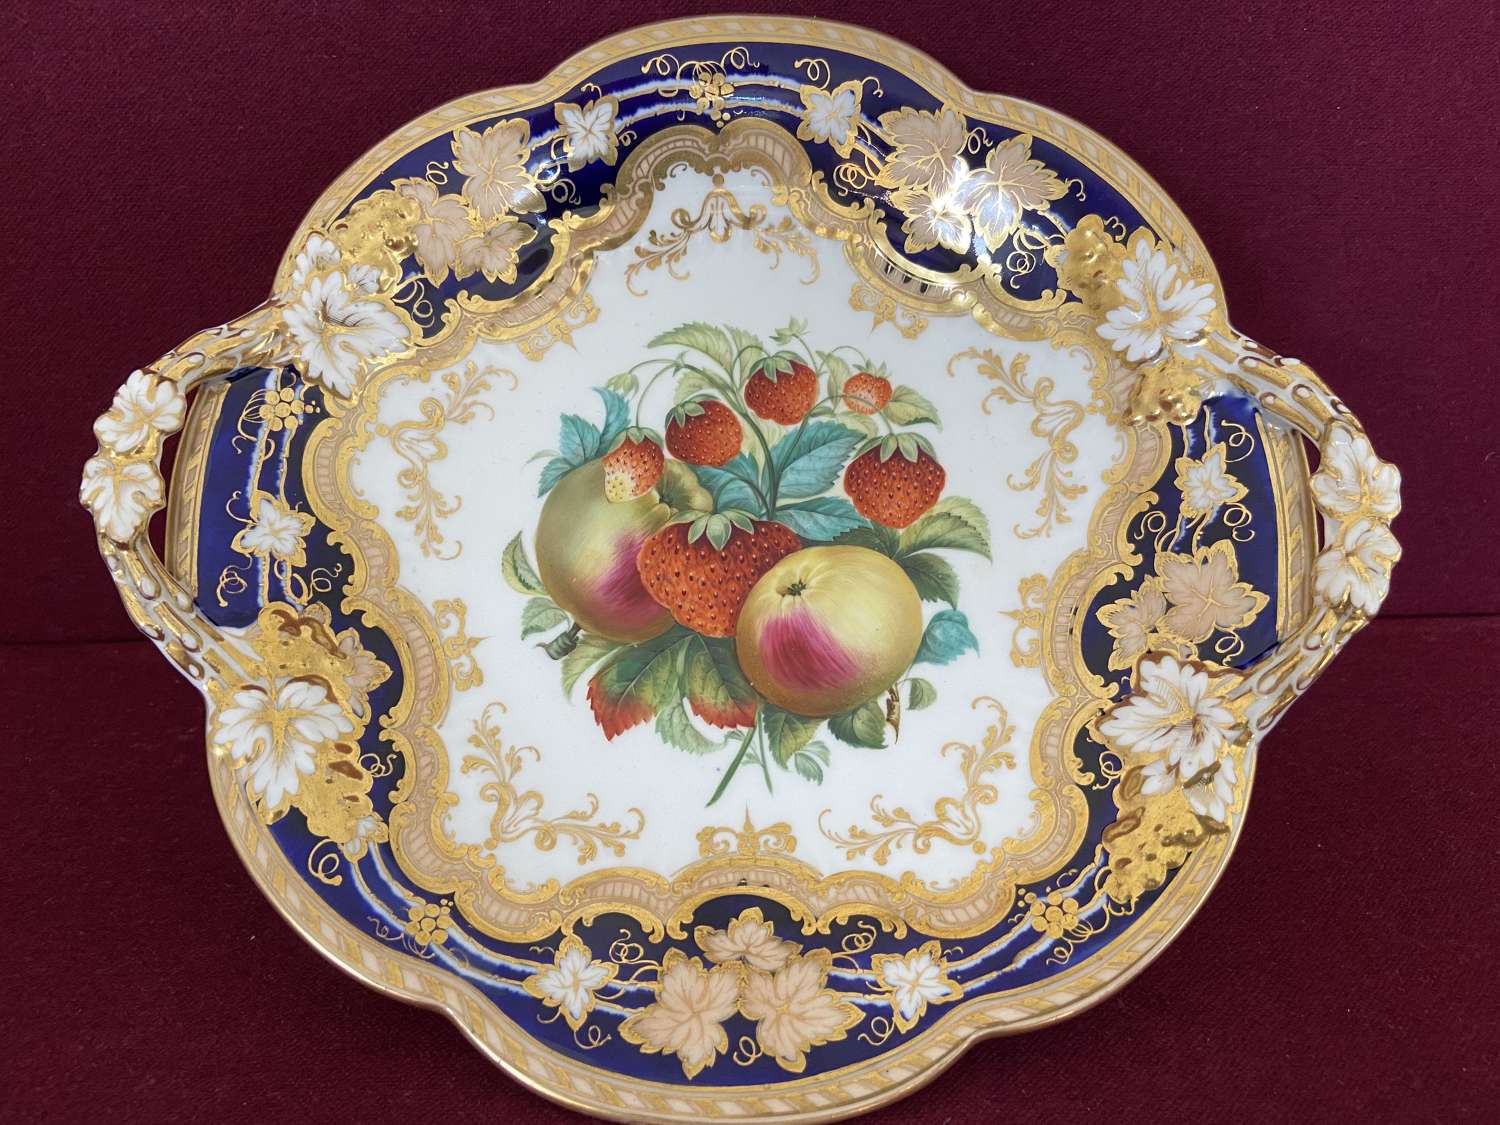 A John Ridgway & Co porcelain dessert comport c.1845